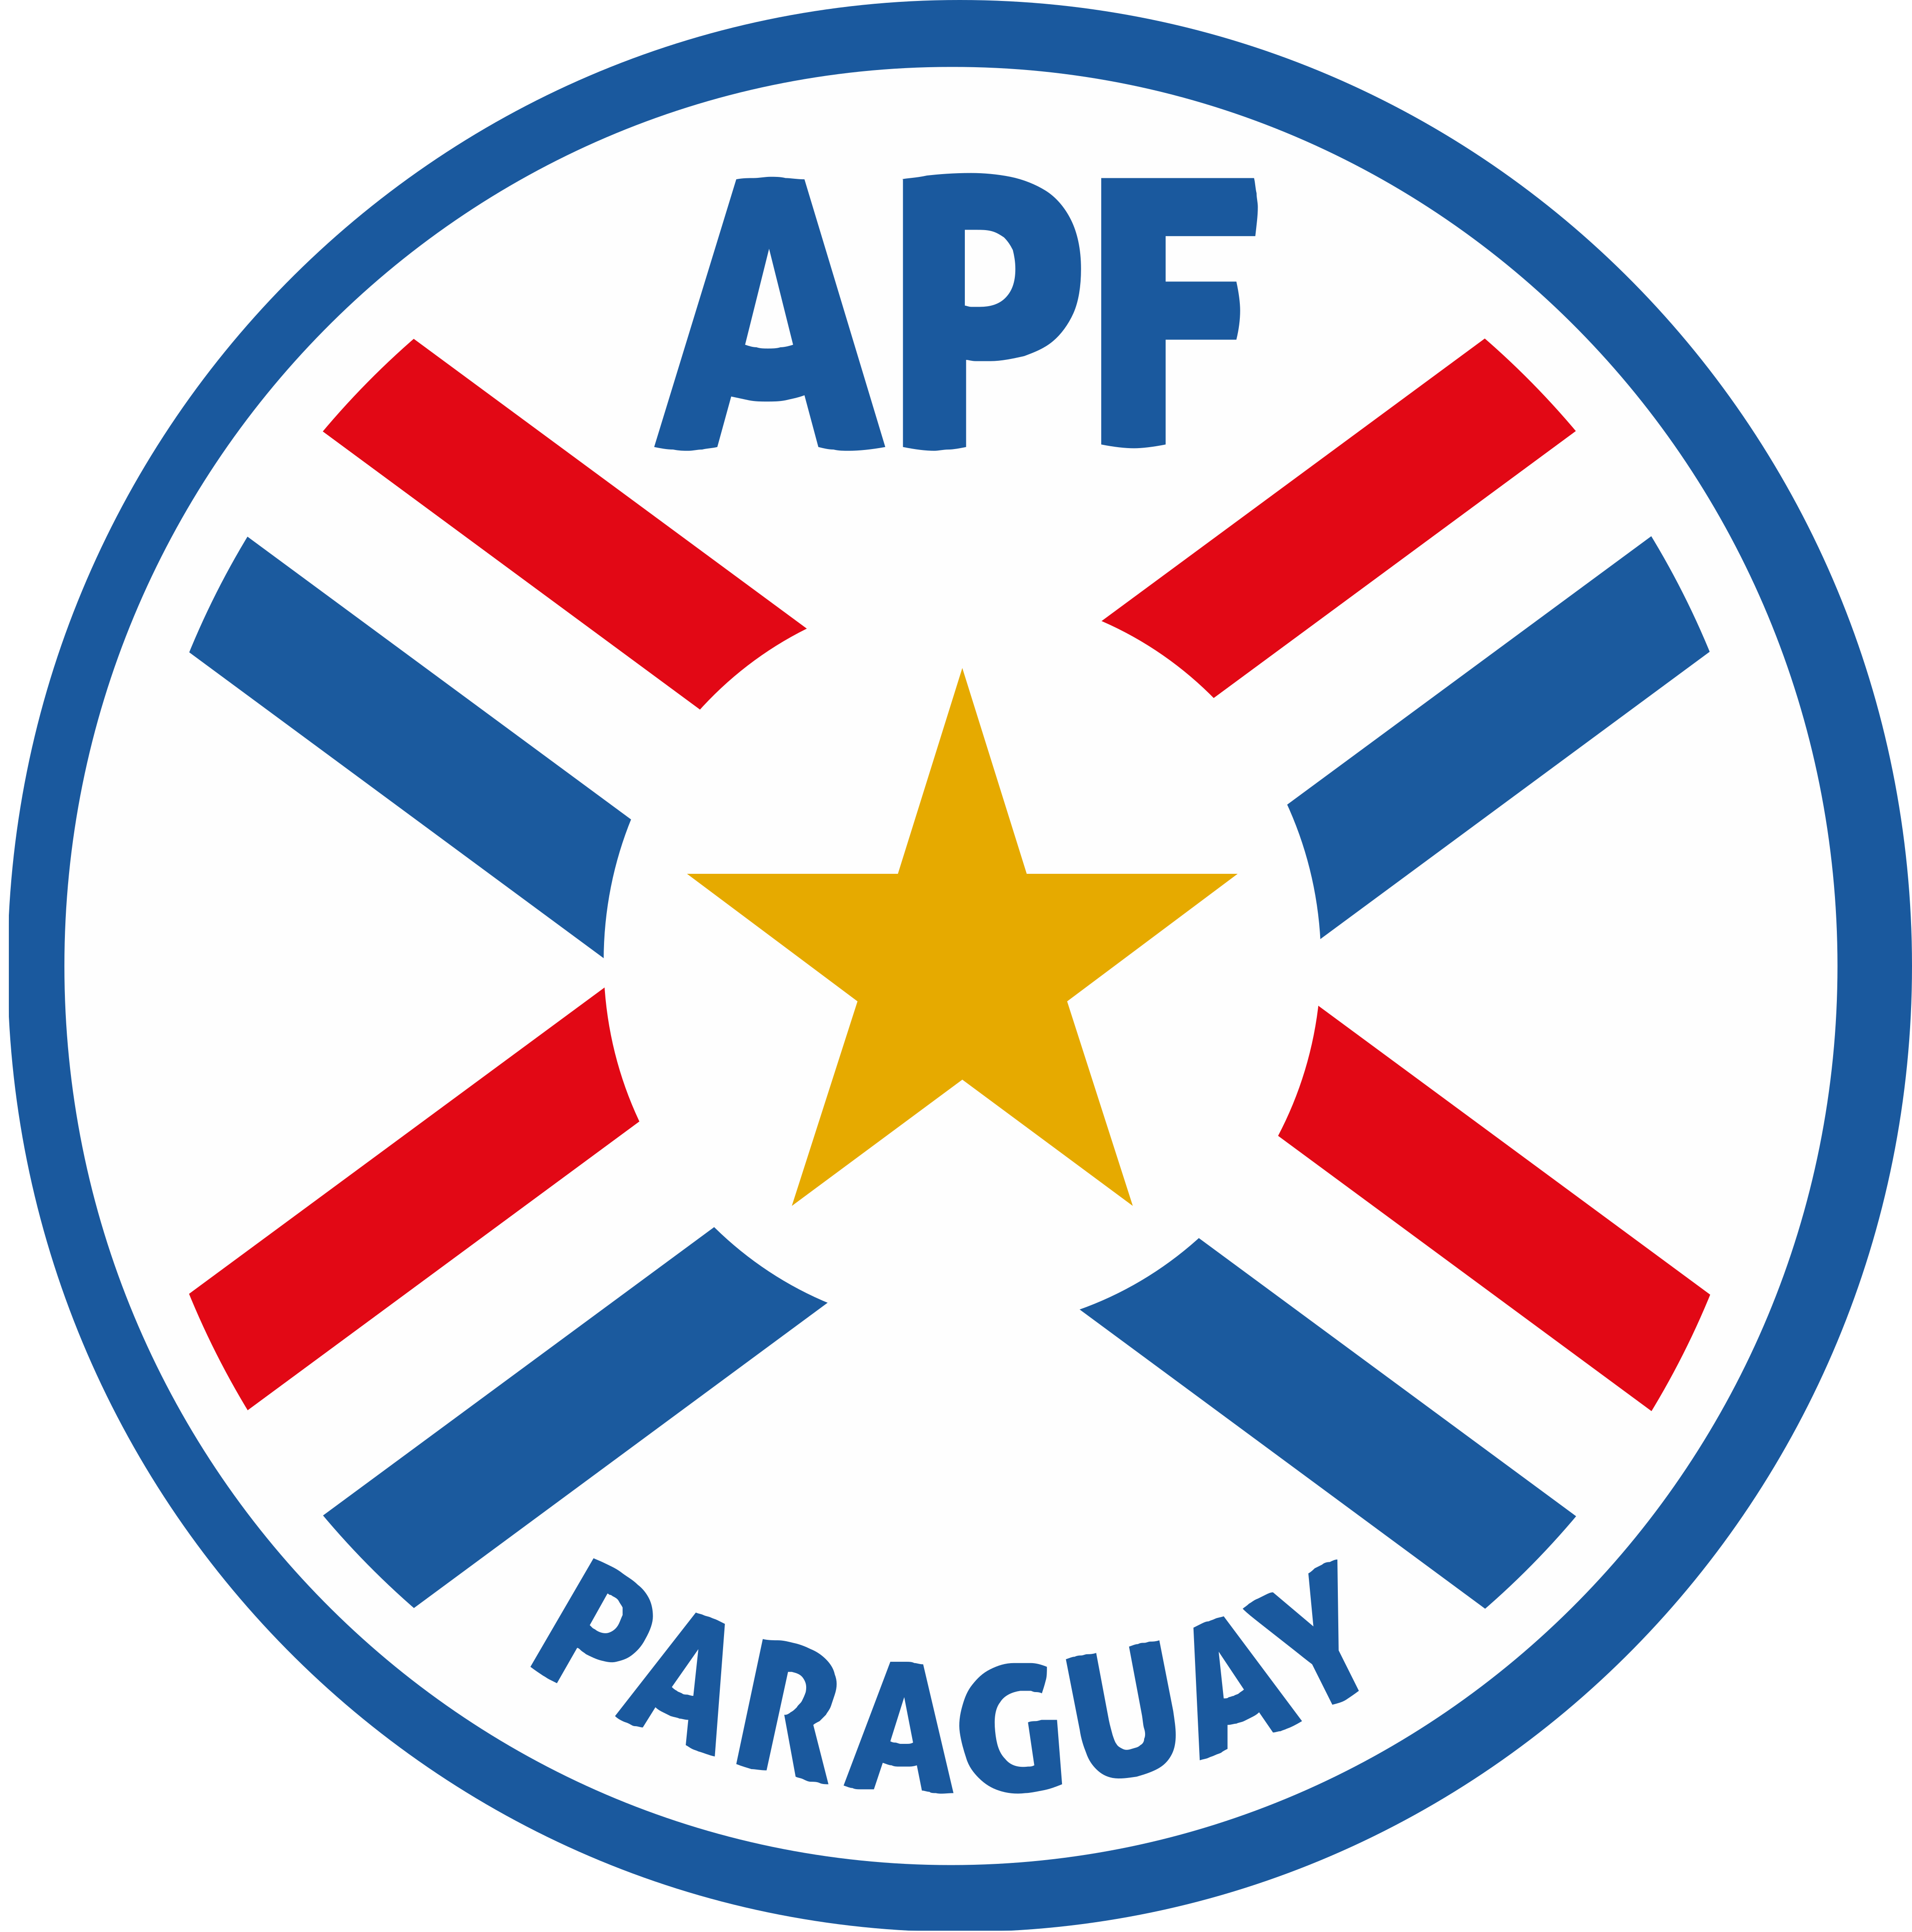 apf seleccion de futbol de paraguay logo - APF Logo - Selección de Fútbol de Paraguay Logo